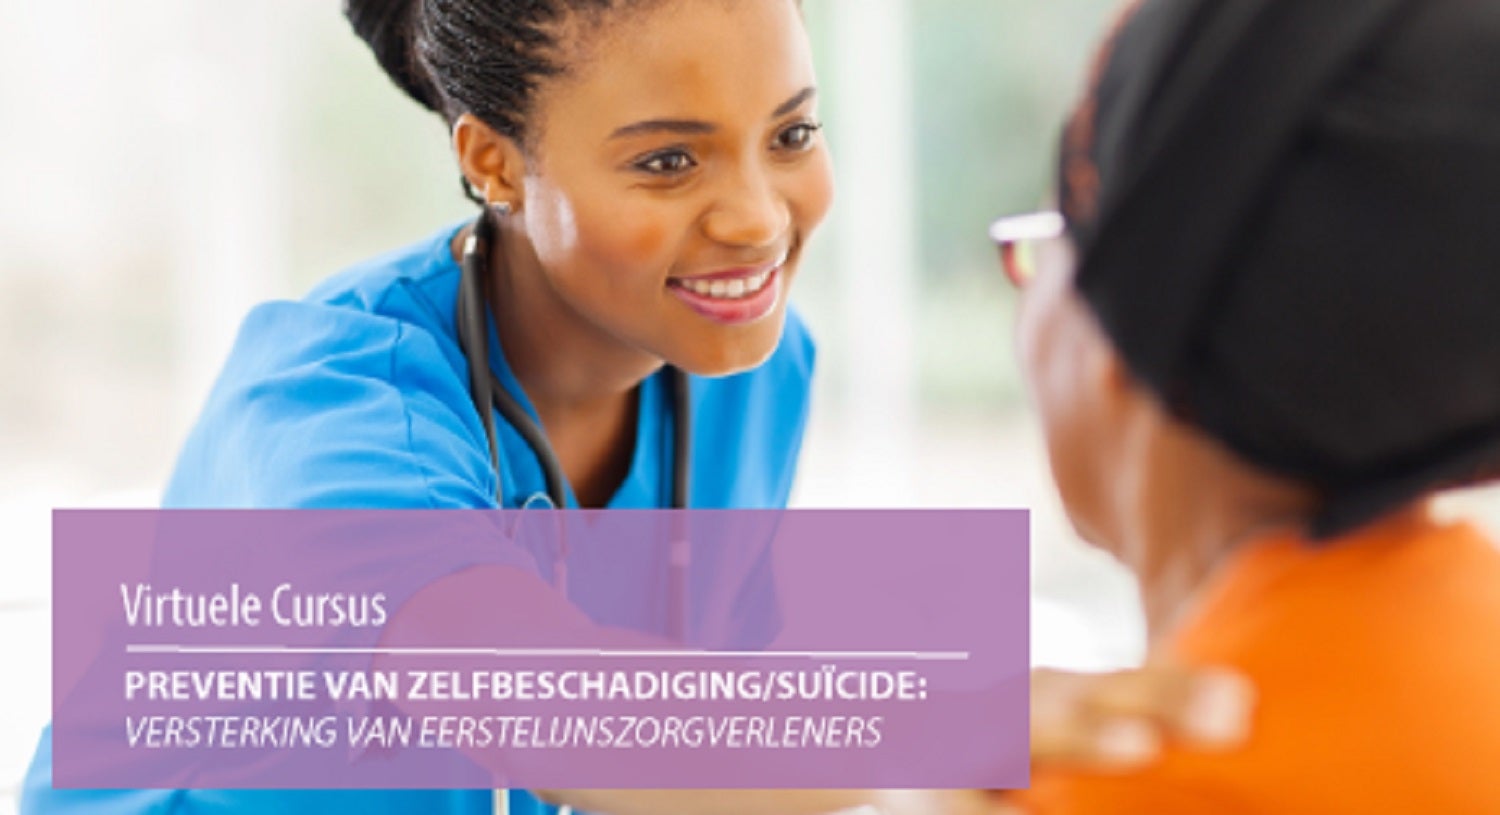 Virtual Course for Suicide Prevention in Dutch